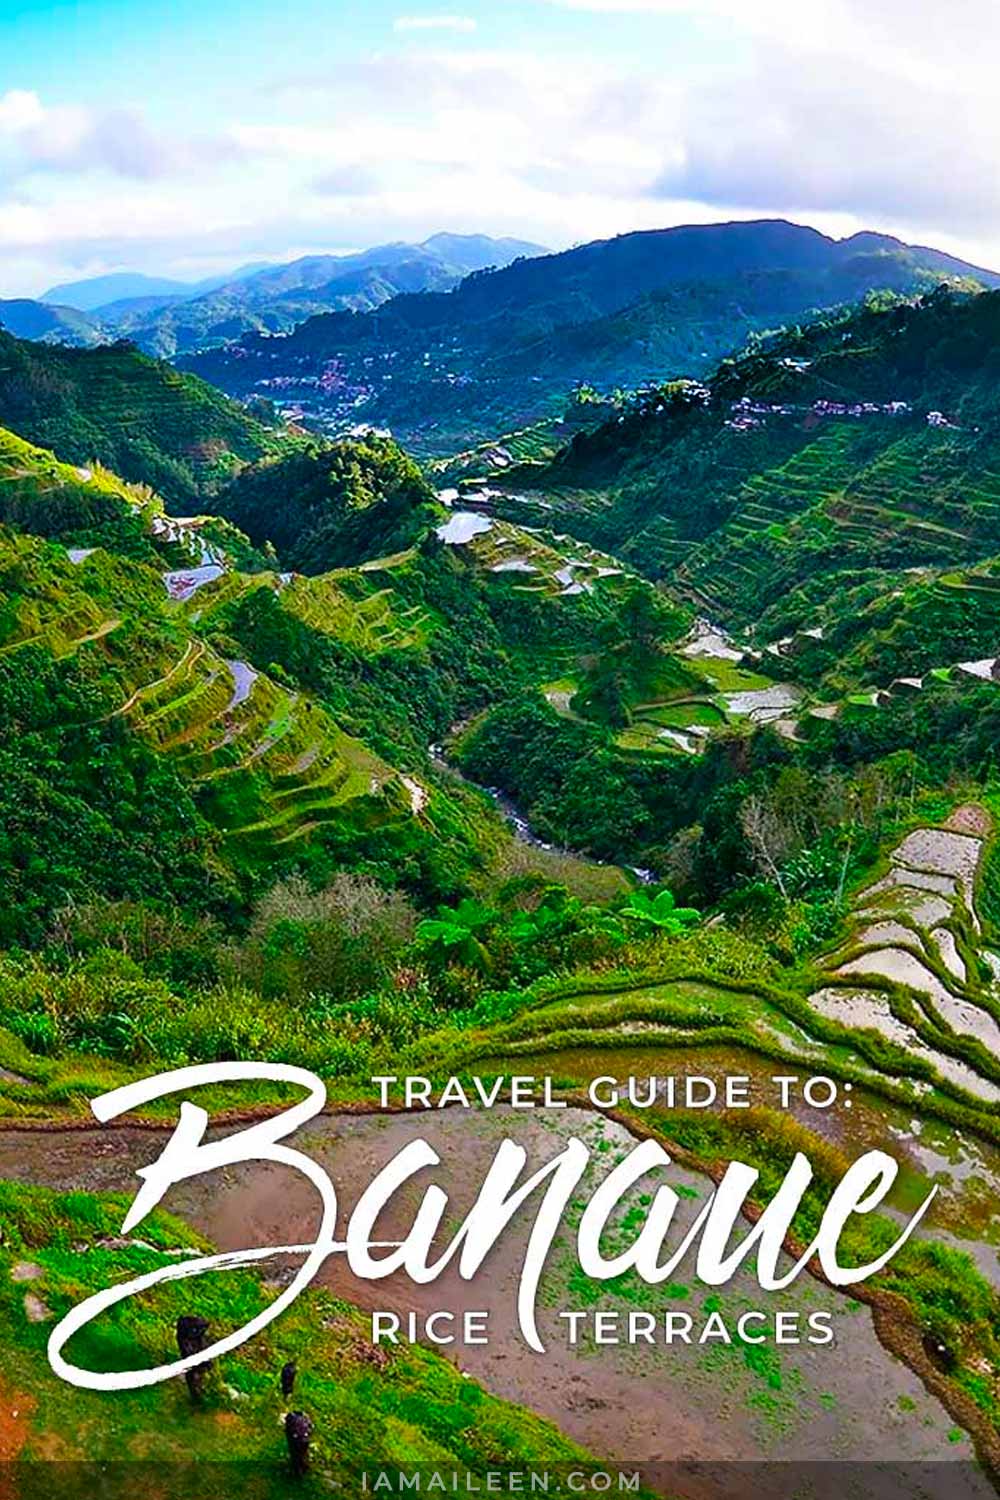 Banaue Rice Terraces Travel Guide